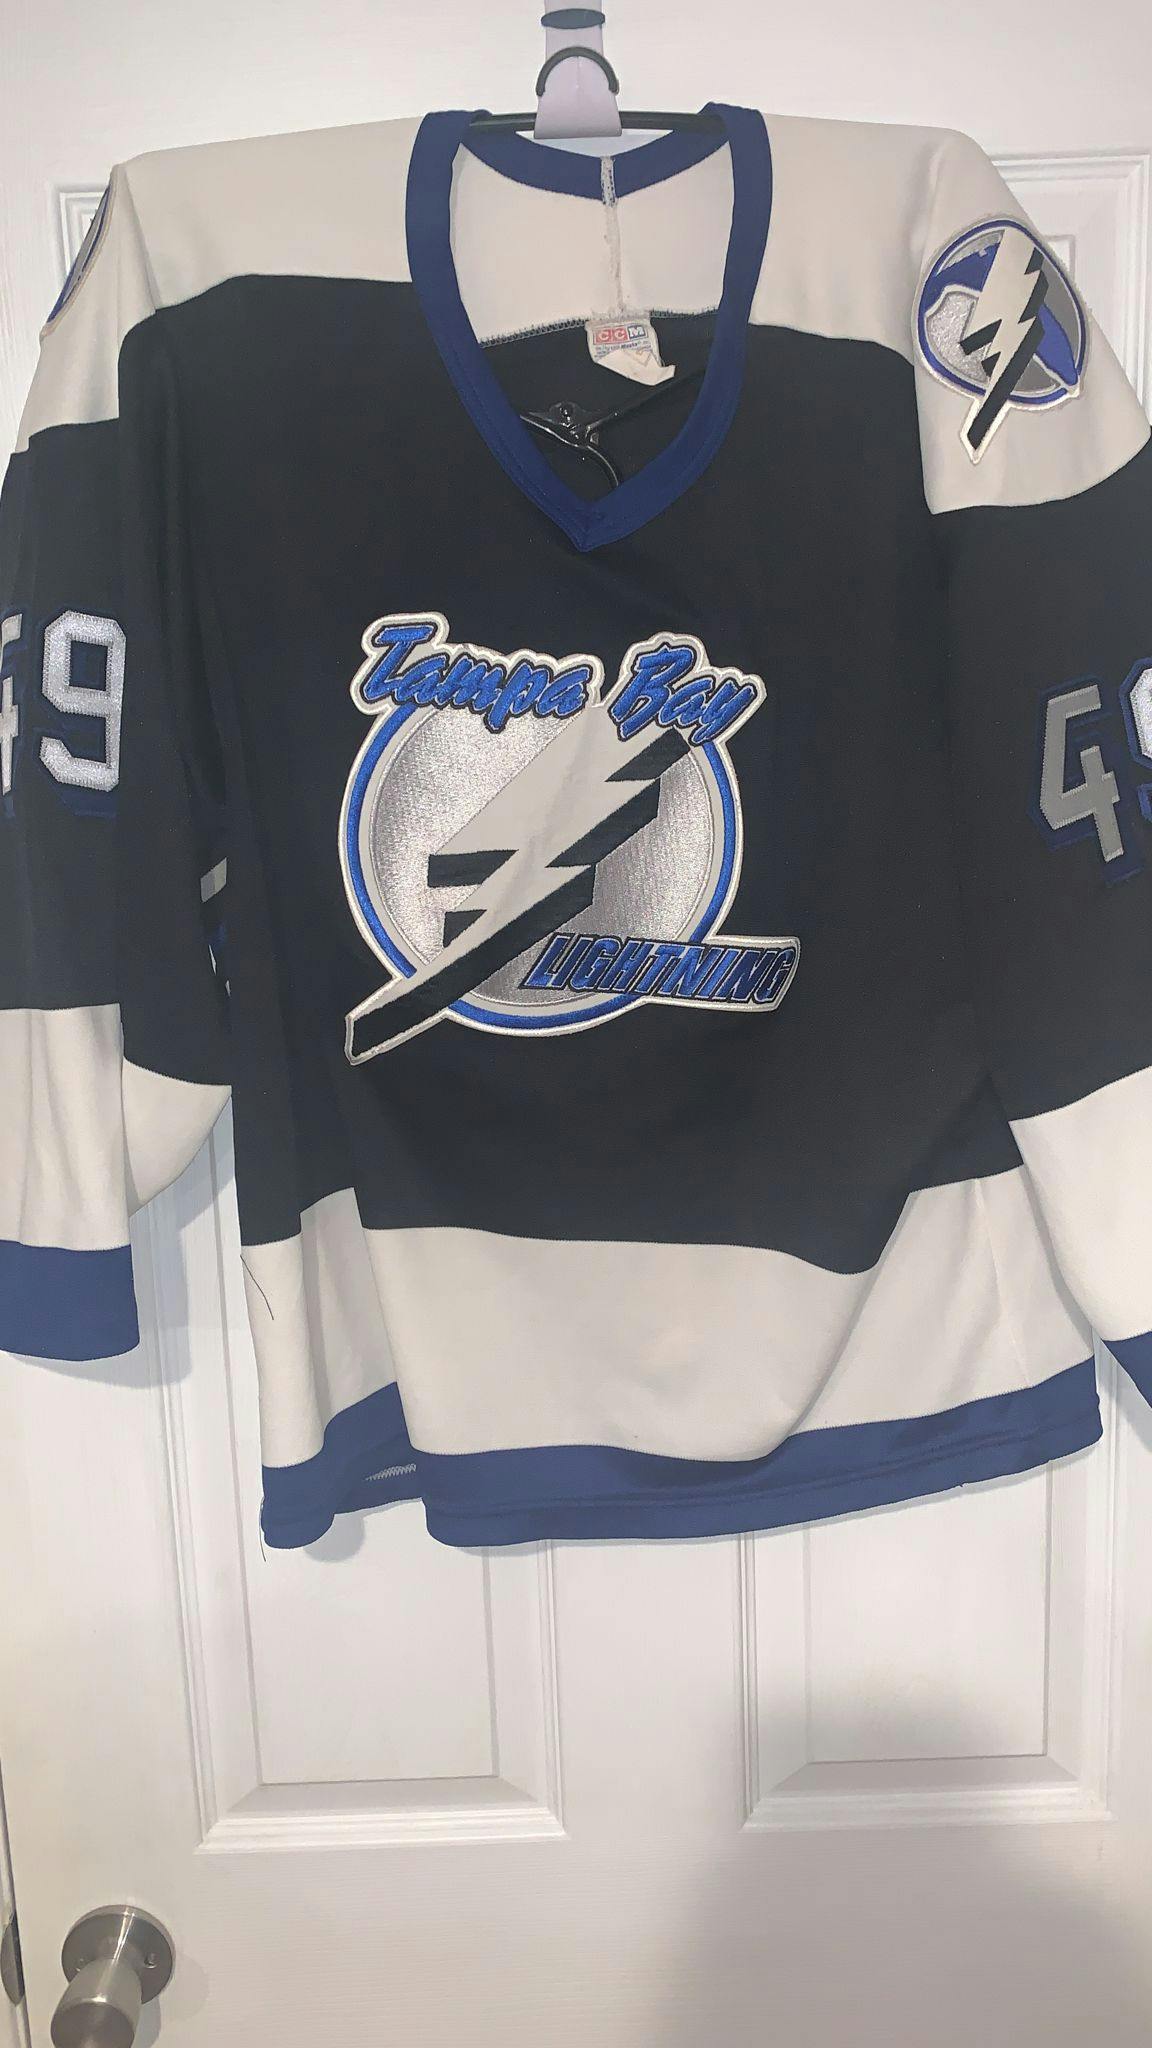 Reebok Tampa Bay Lightning alternate Bolts hockey jersey size Medium